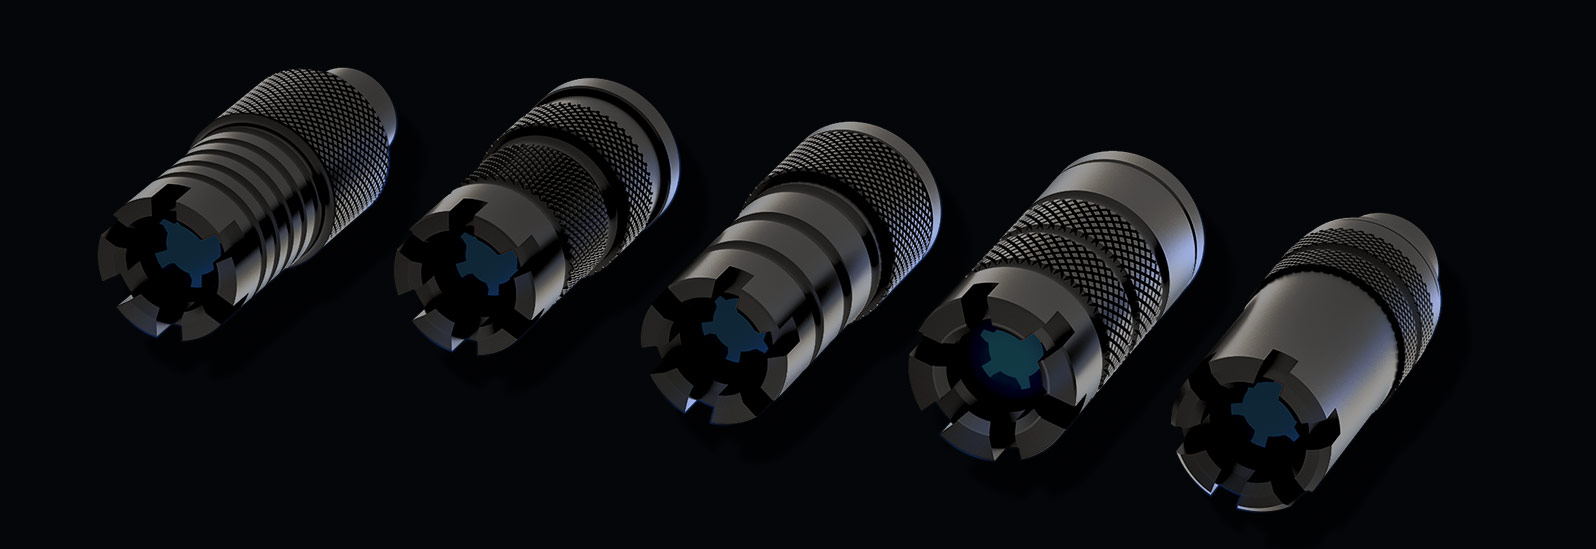 Серия лазертаг оптики Parallax